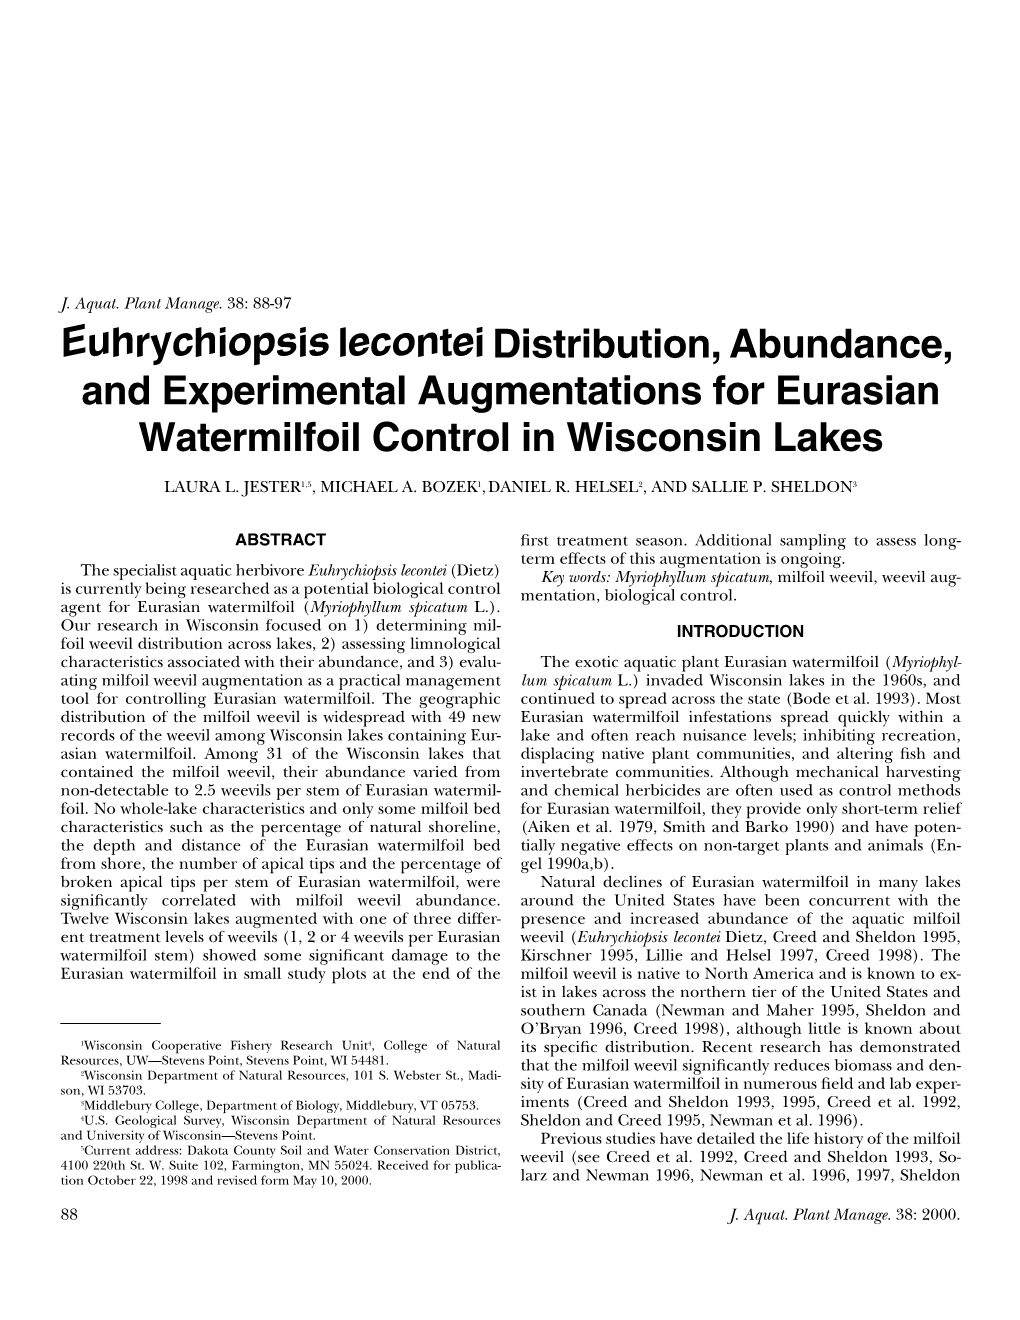 Euhrychiopsis Leconteidistribution, Abundance, and Experimental